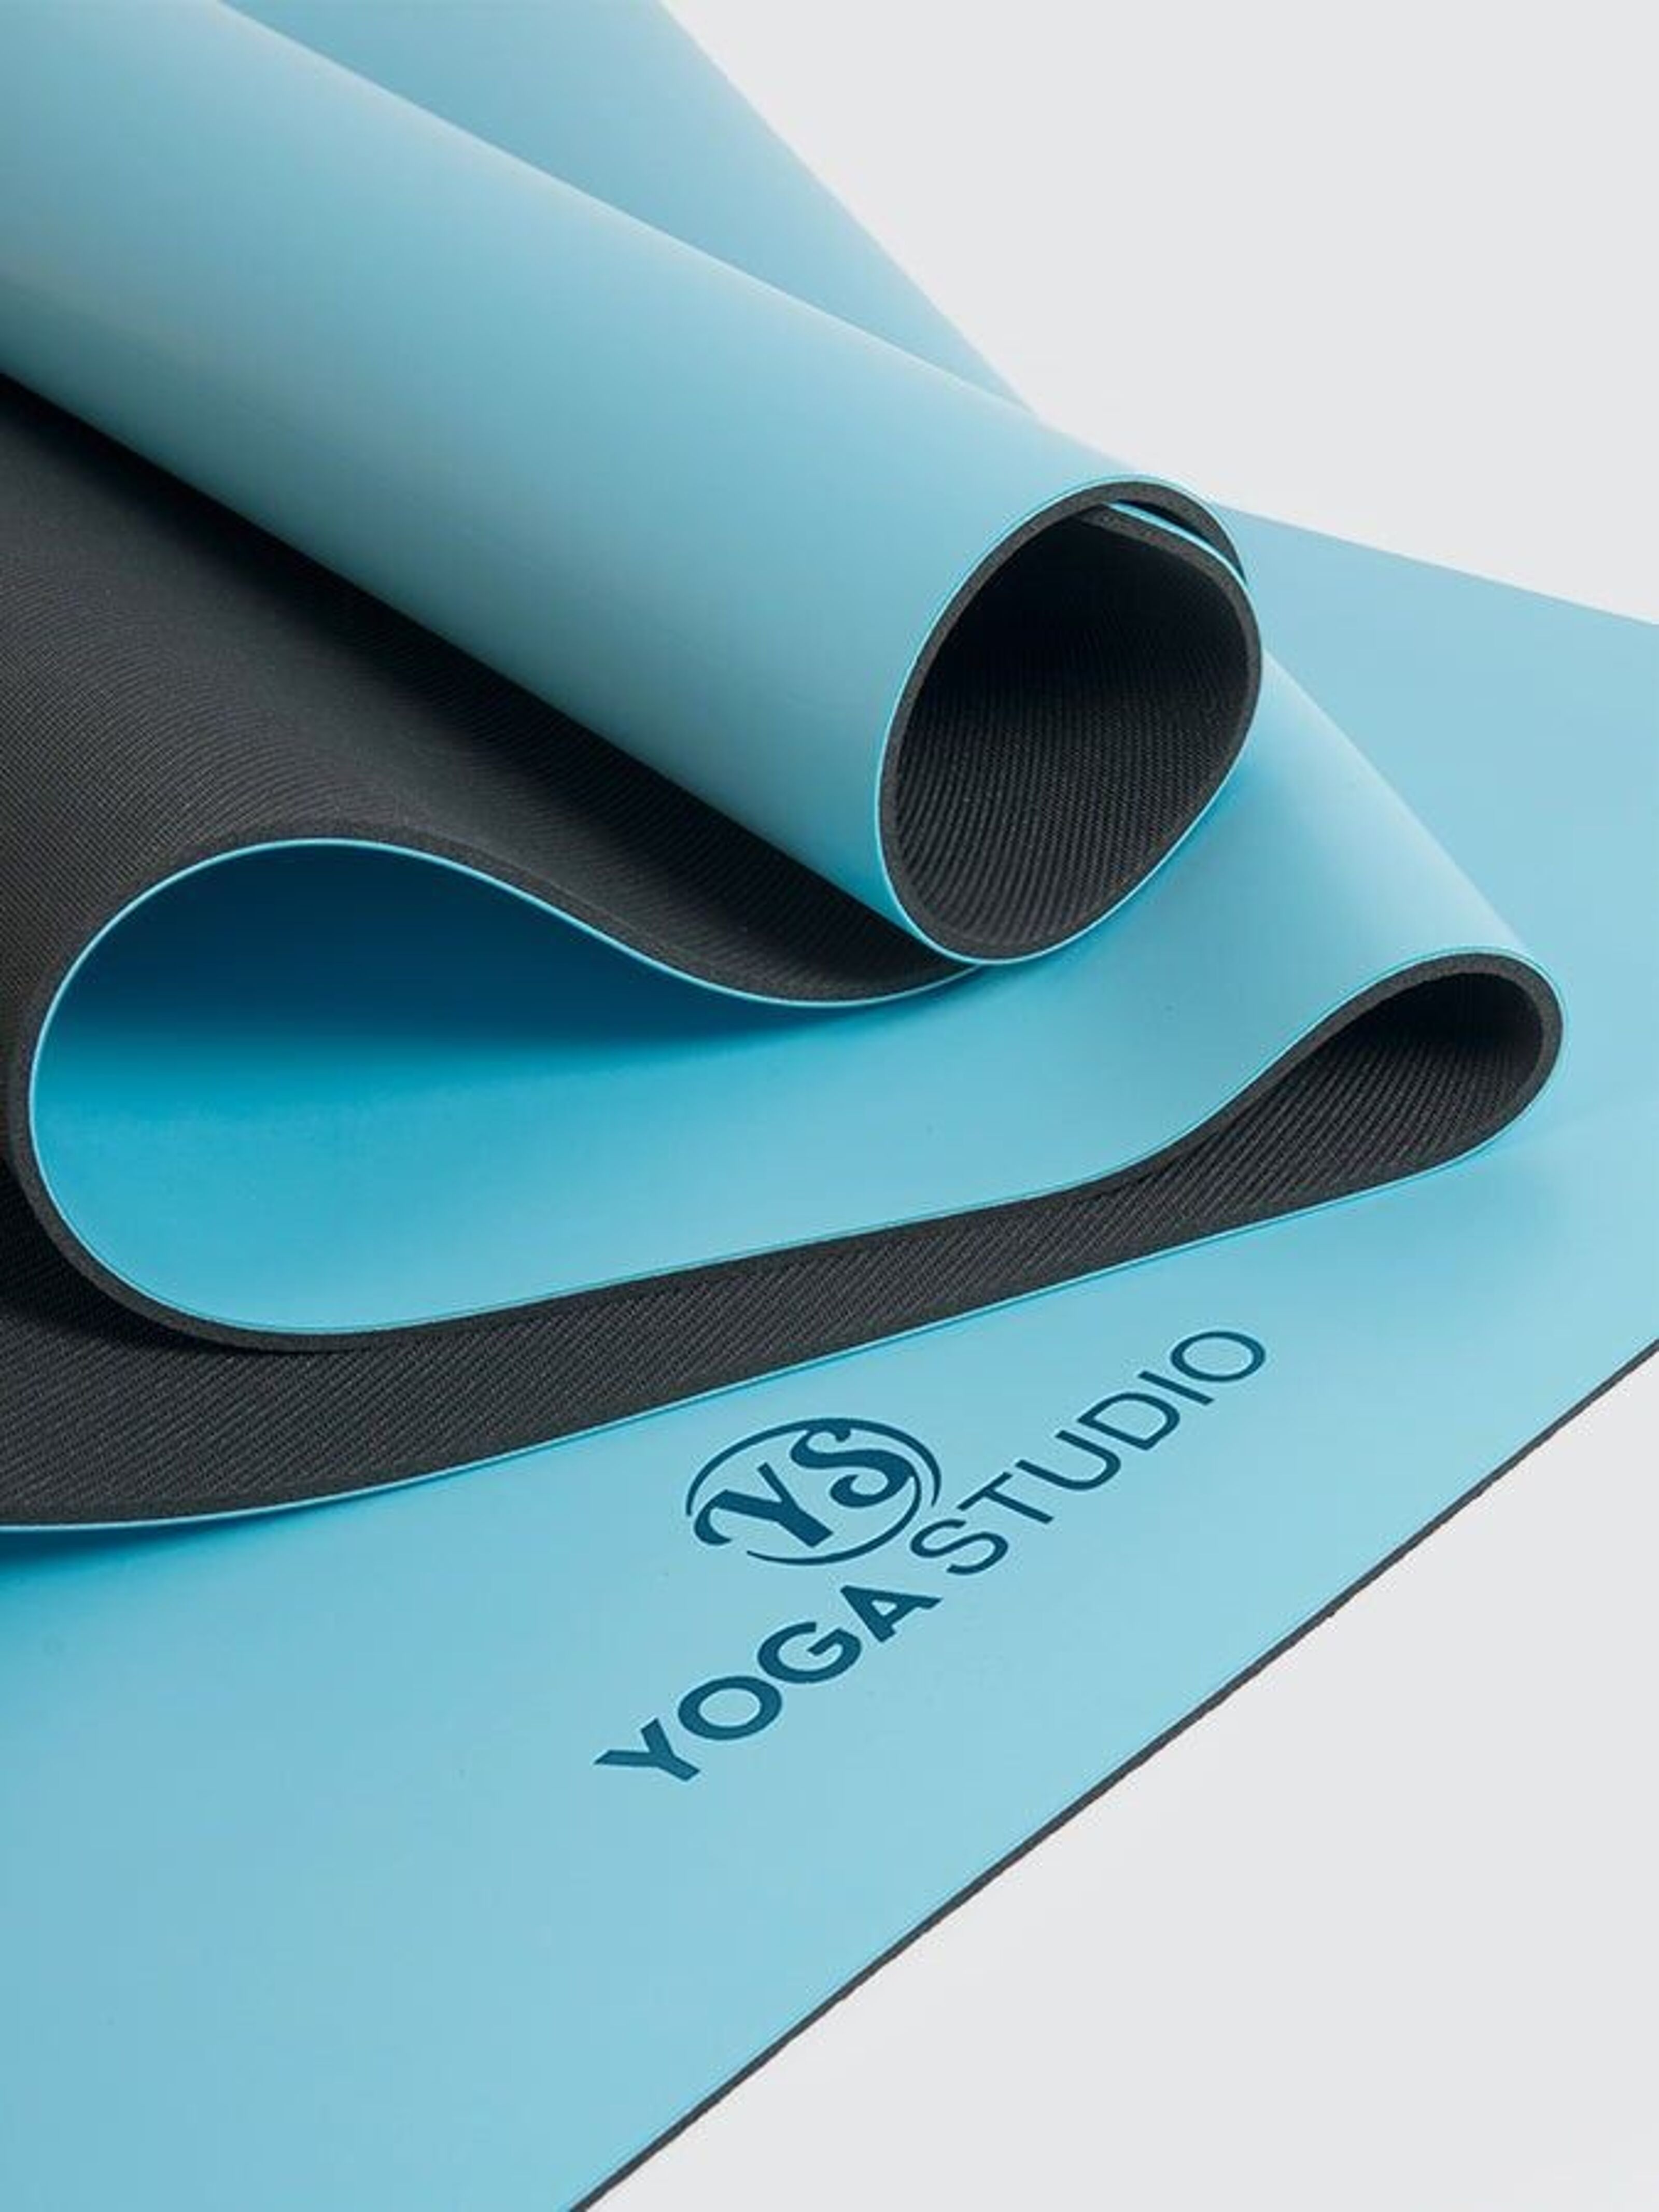 Buy wholesale Yogi Bare LFC “You'll Never Walk Alone Rubber Yoga Mat